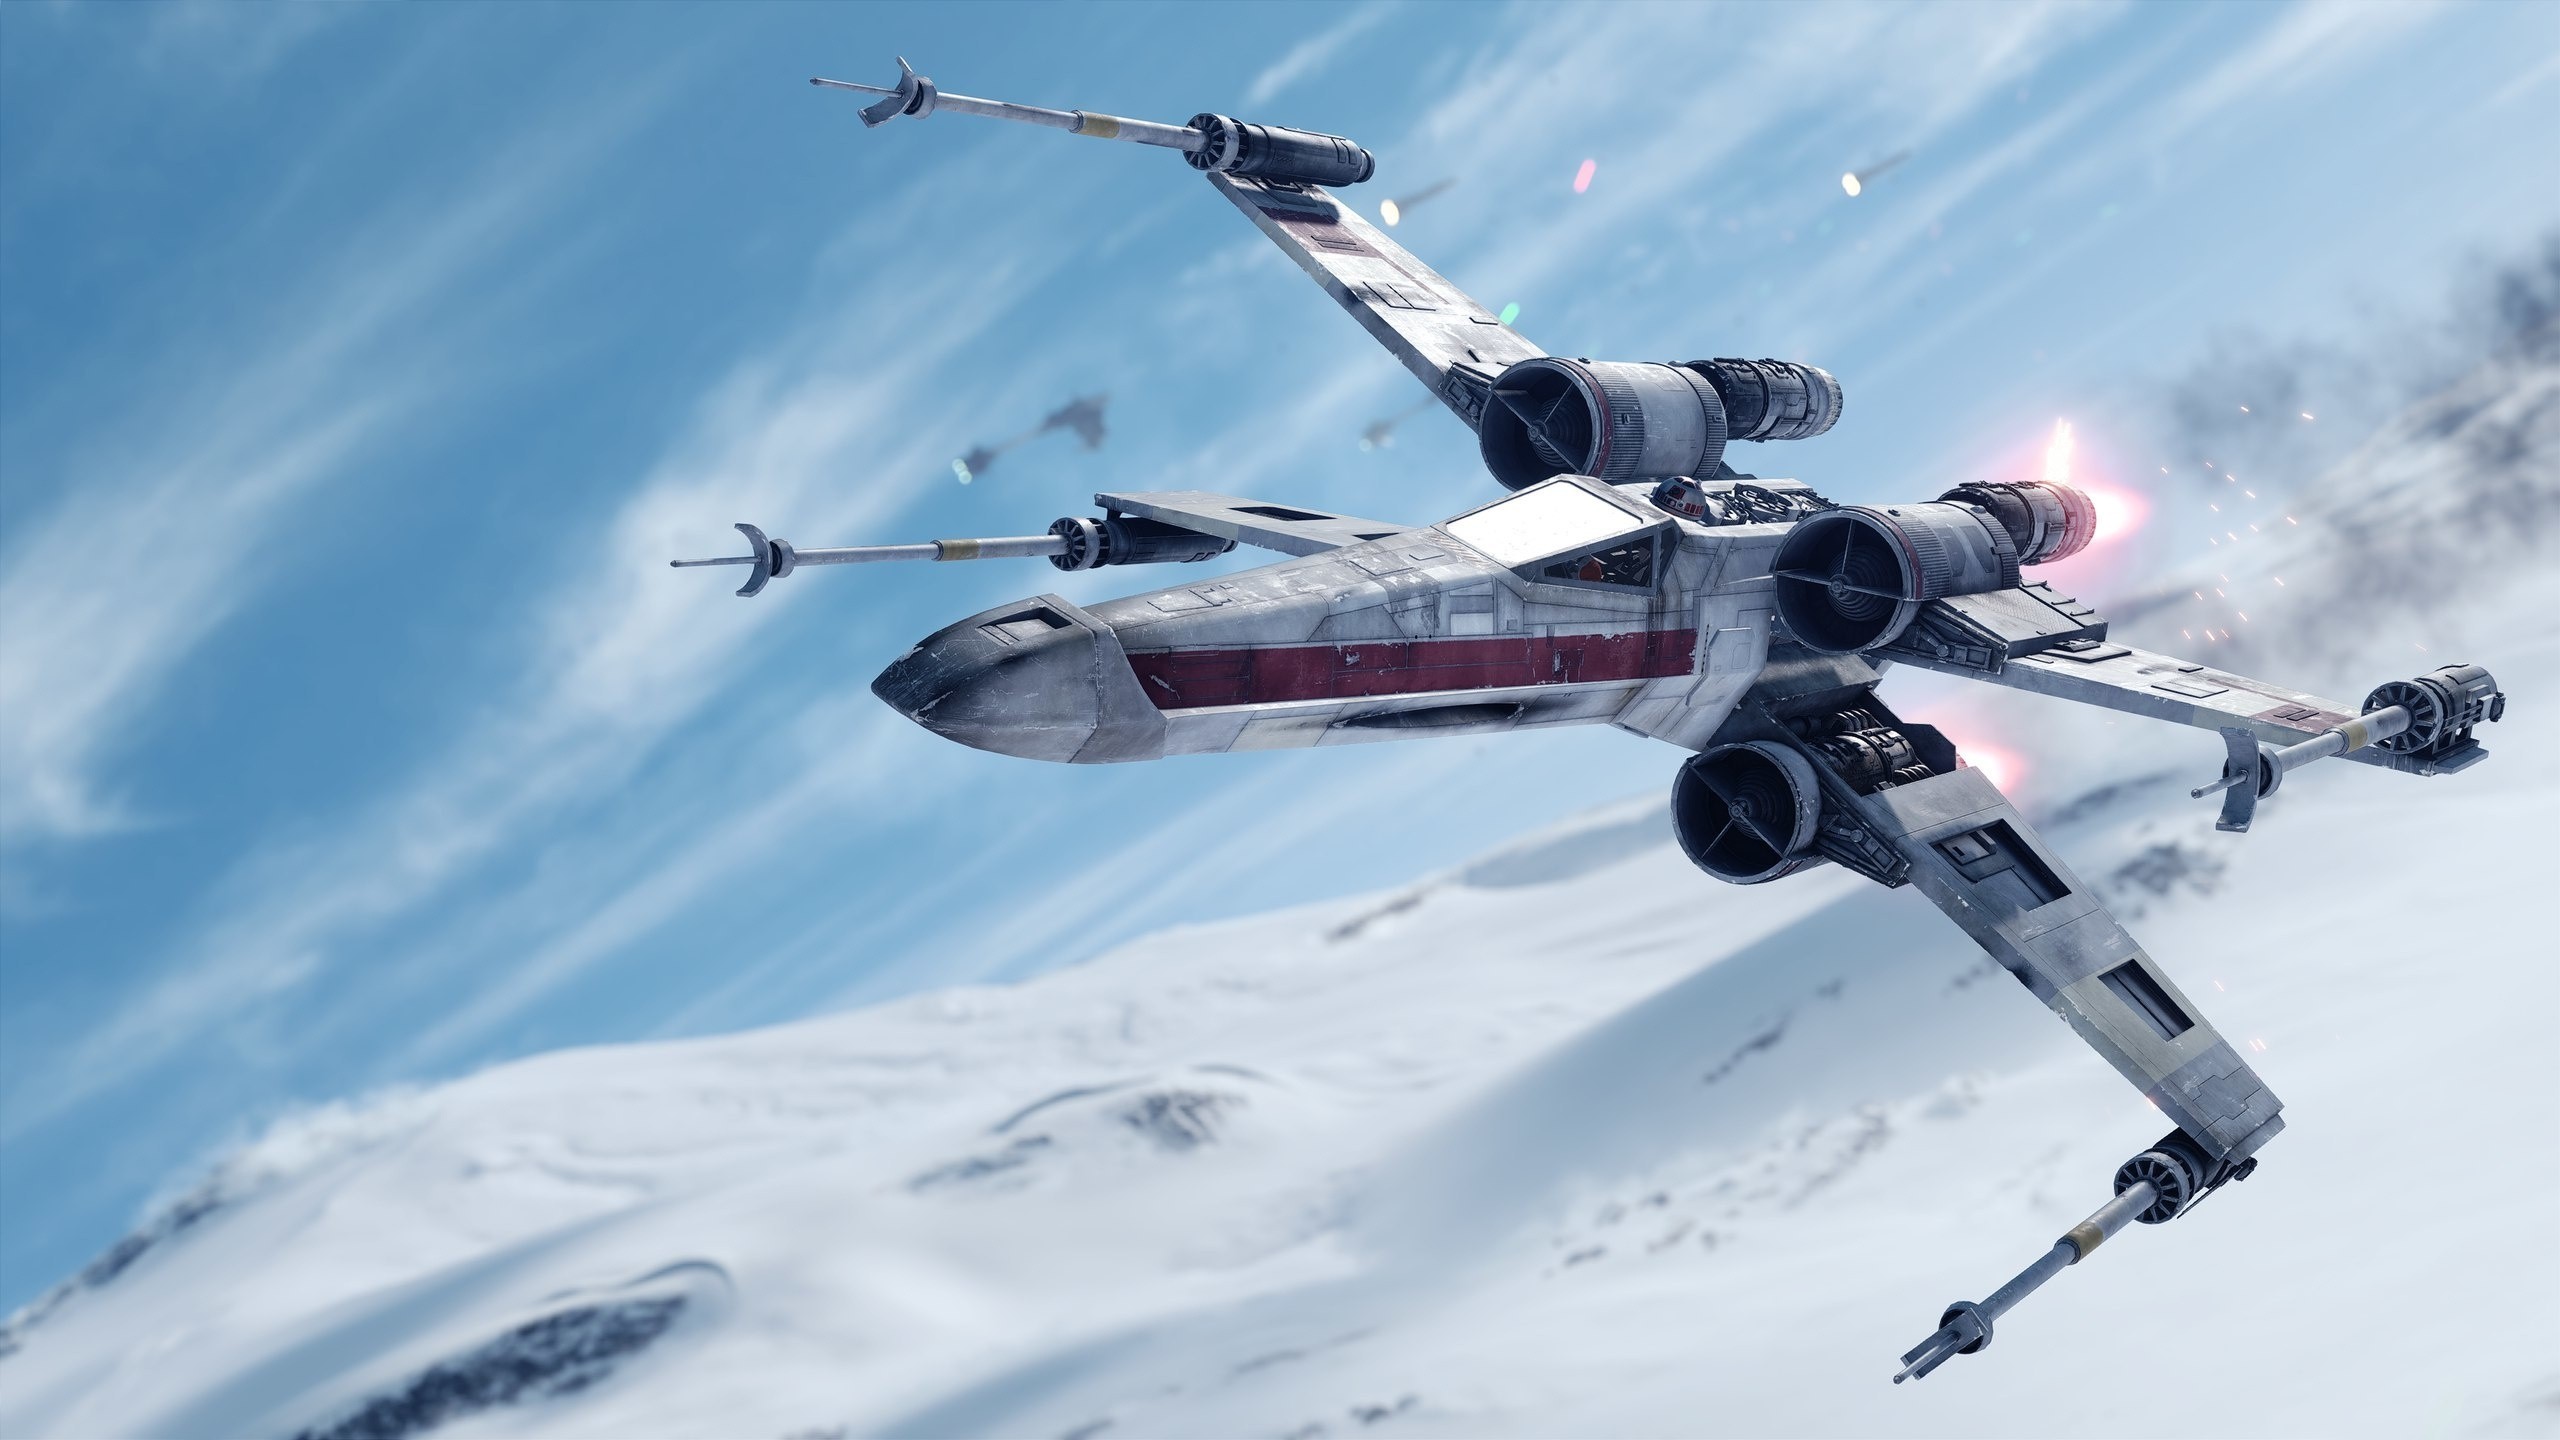 General 2560x1440 Star Wars: Battlefront Star Wars video games X-wing Hoth artwork PC gaming Star Wars Ships vehicle video game art Rebel Alliance